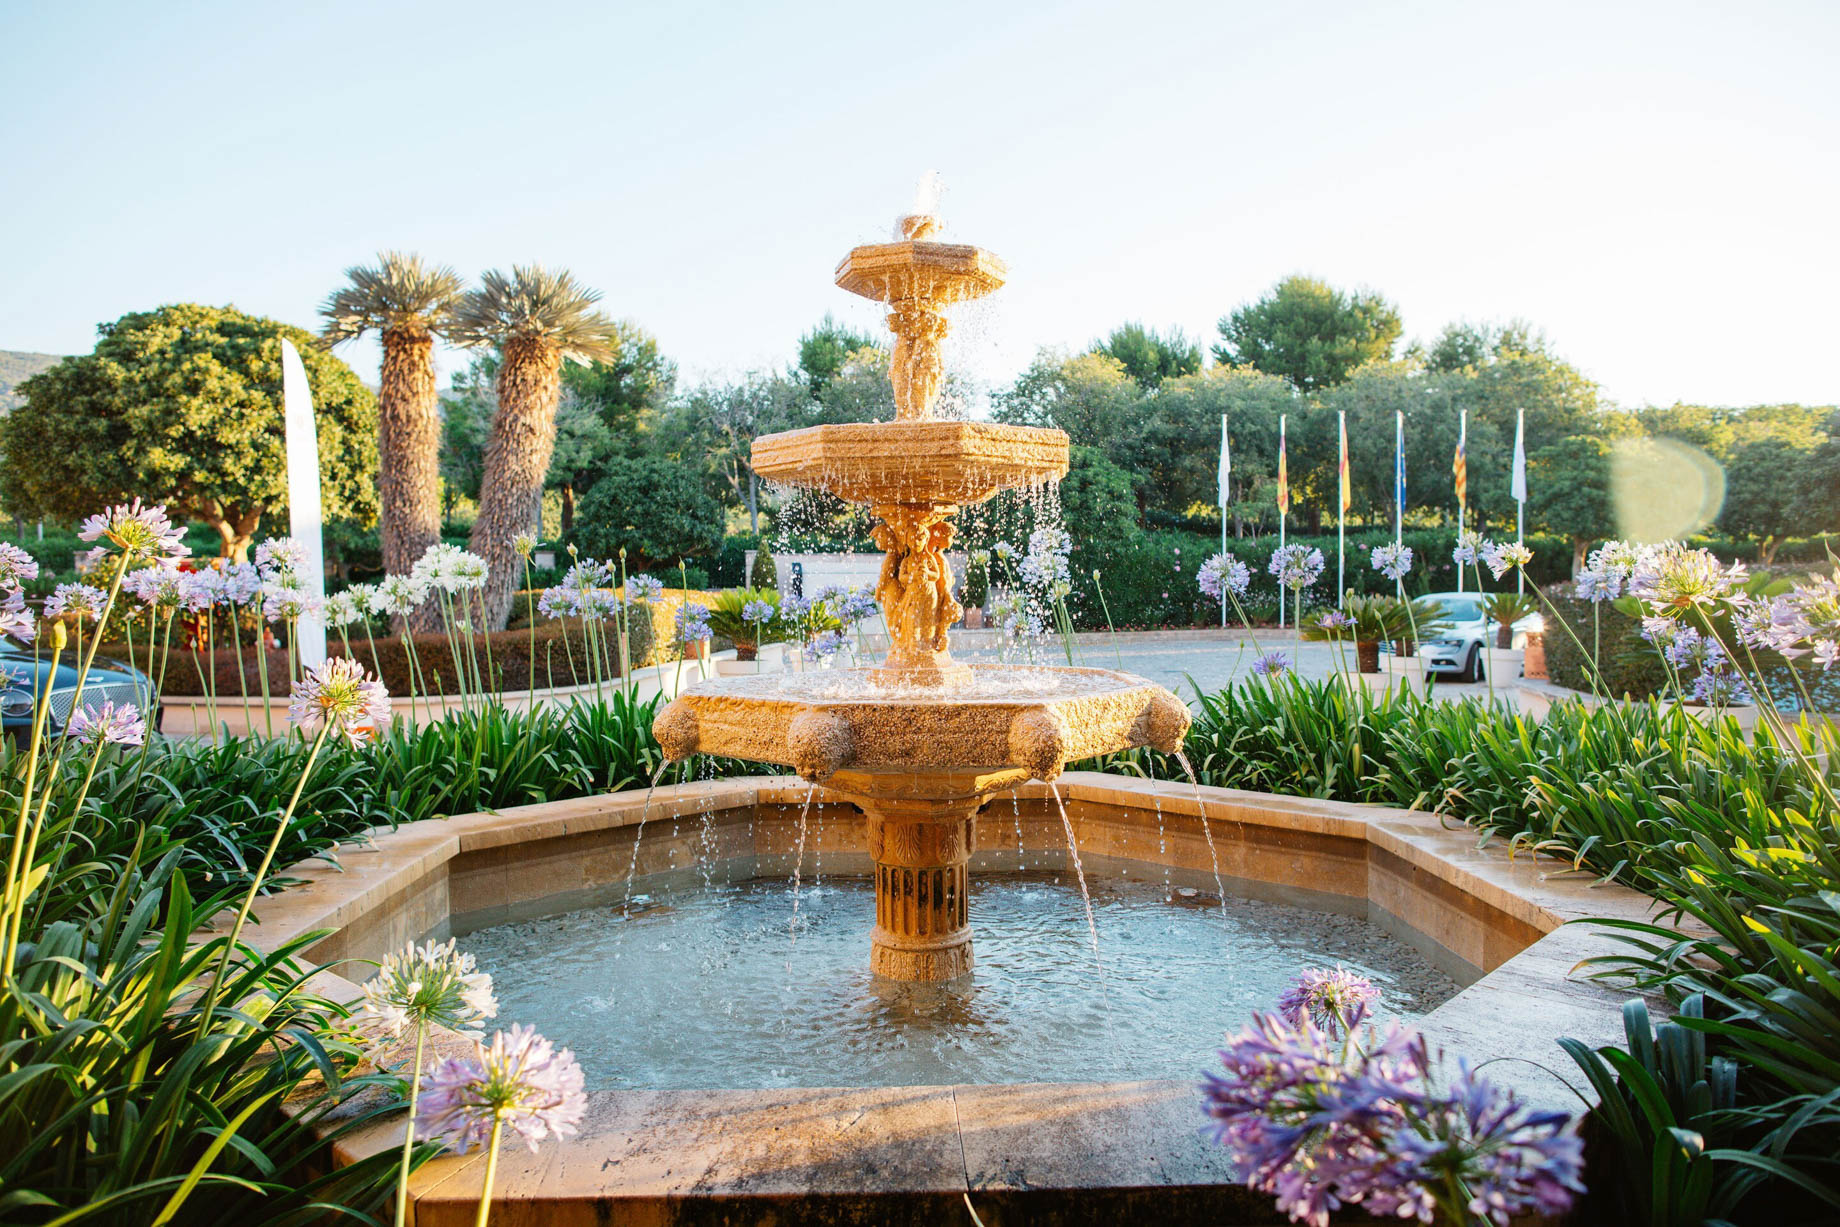 The St. Regis Mardavall Mallorca Resort – Palma de Mallorca, Spain – Exterior Fountain